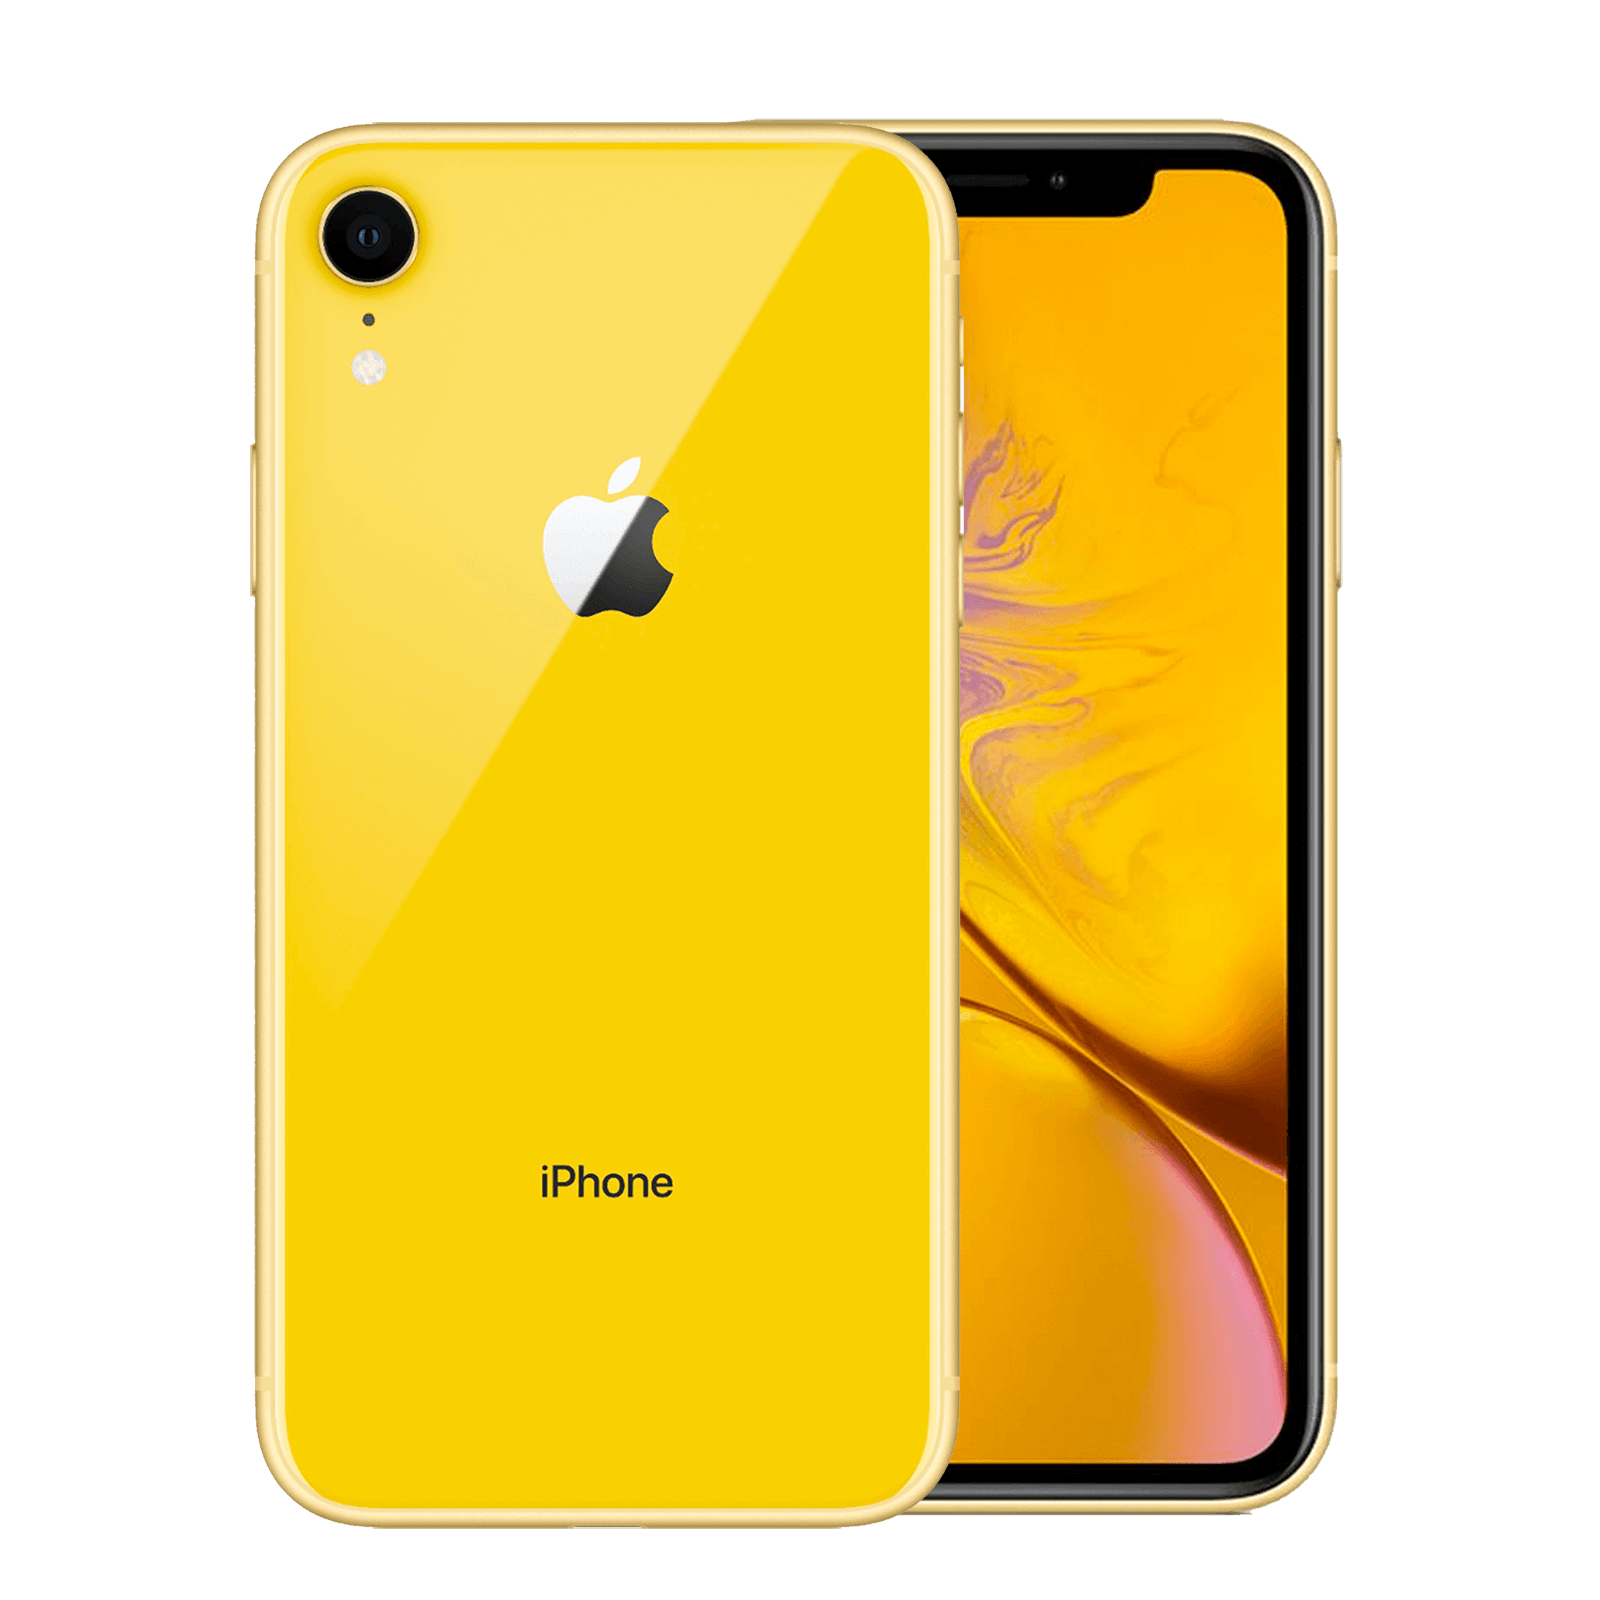 Apple iPhone XR 128GB Yellow Good - Unlocked